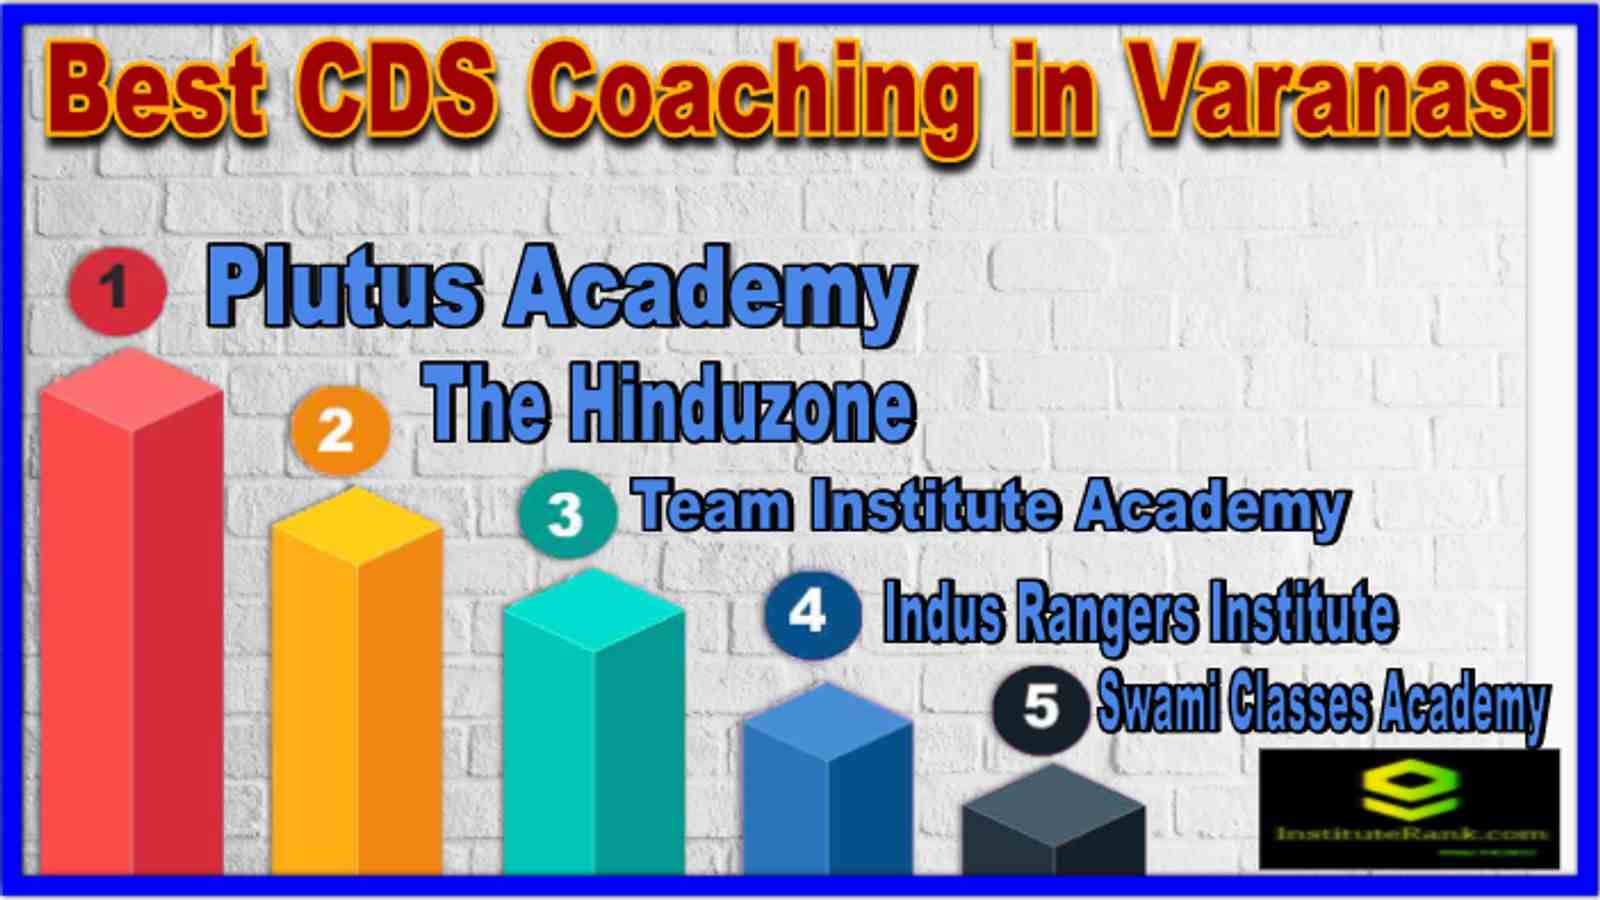 Top CDS Coaching in Varanasi